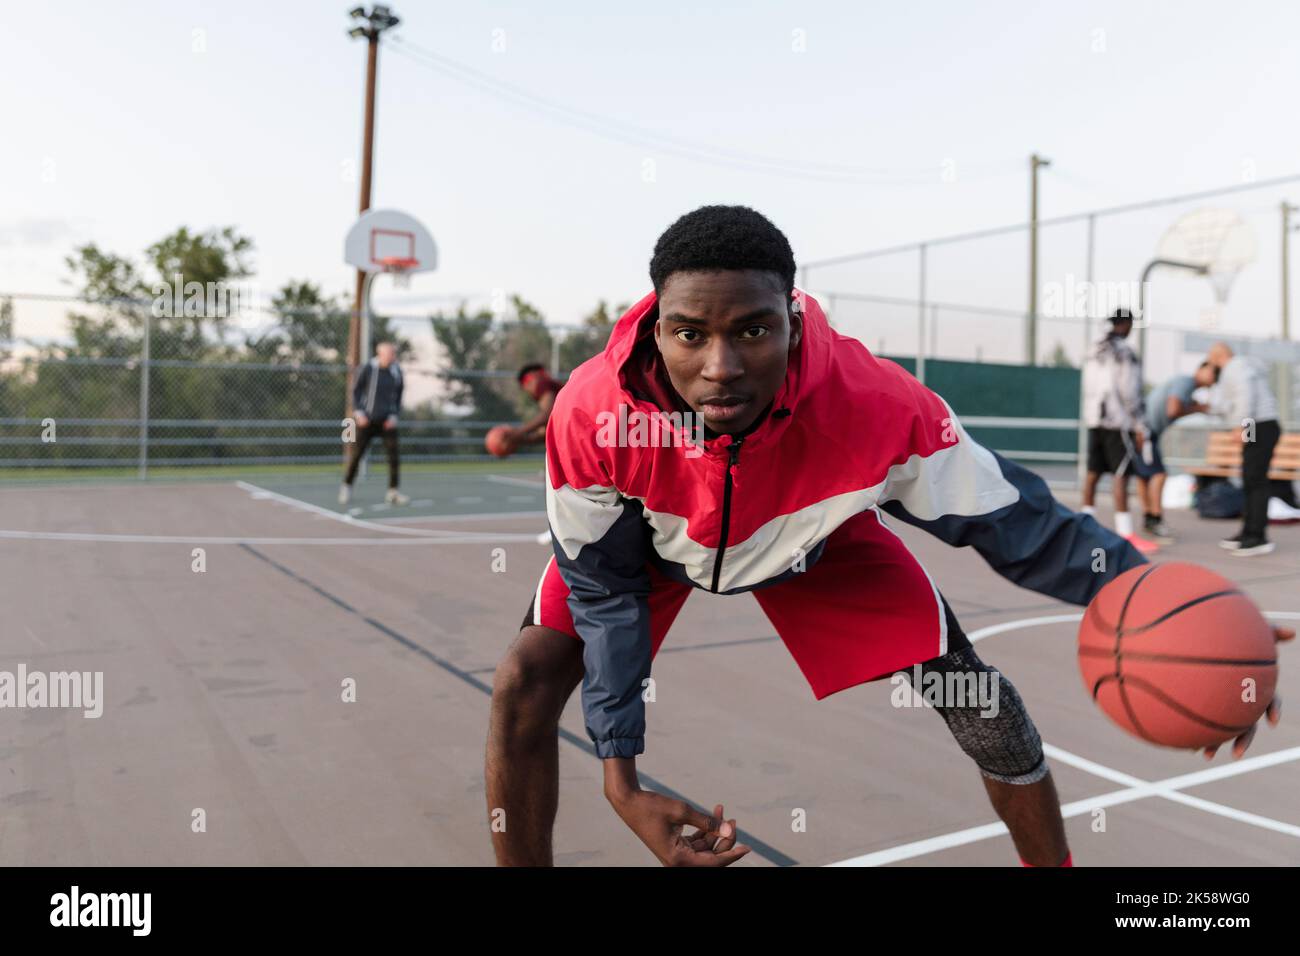 Action shot of basketball player with ball facing camera Stock Photo